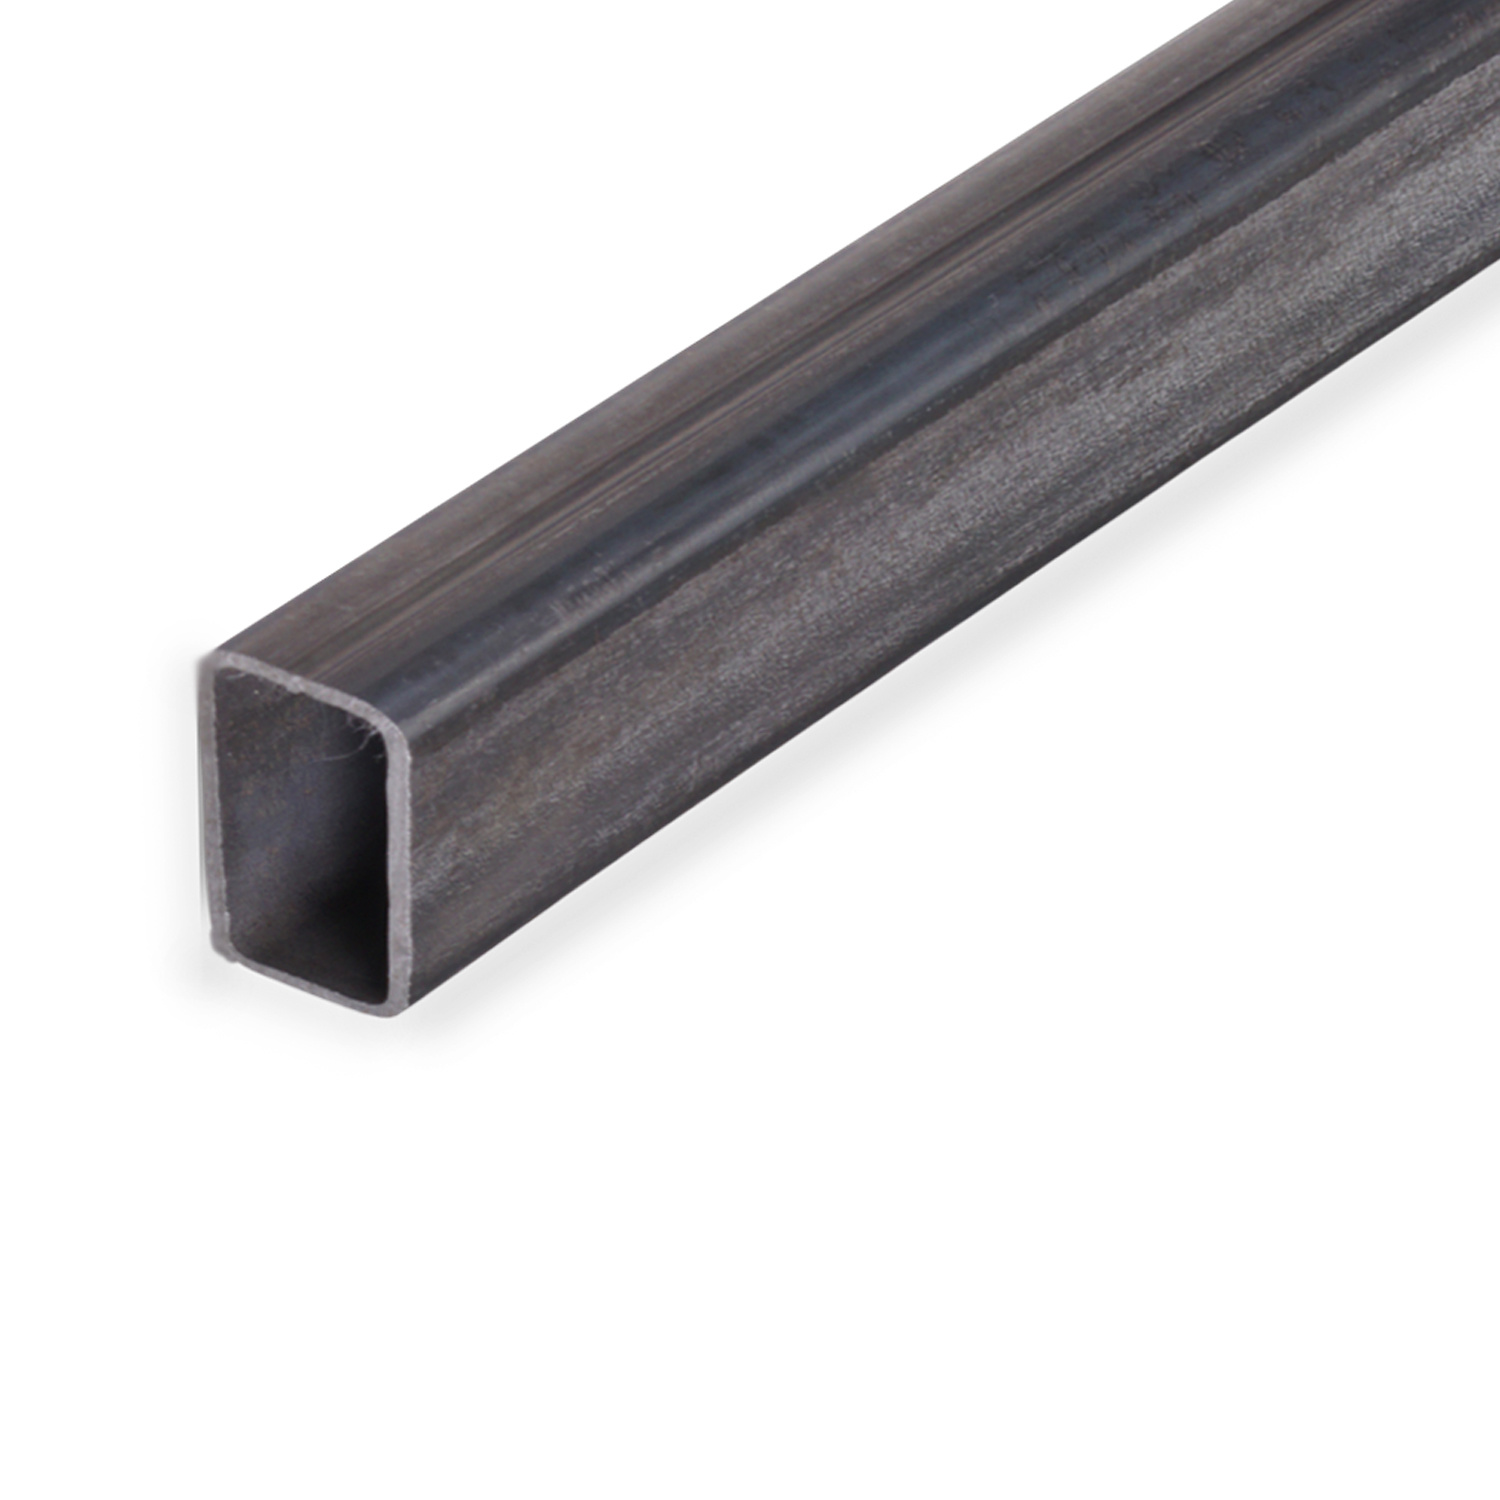  Koker staal - rechthoekige buis kokerprofiel KGV staal - S235JR - 50x25x2 MM